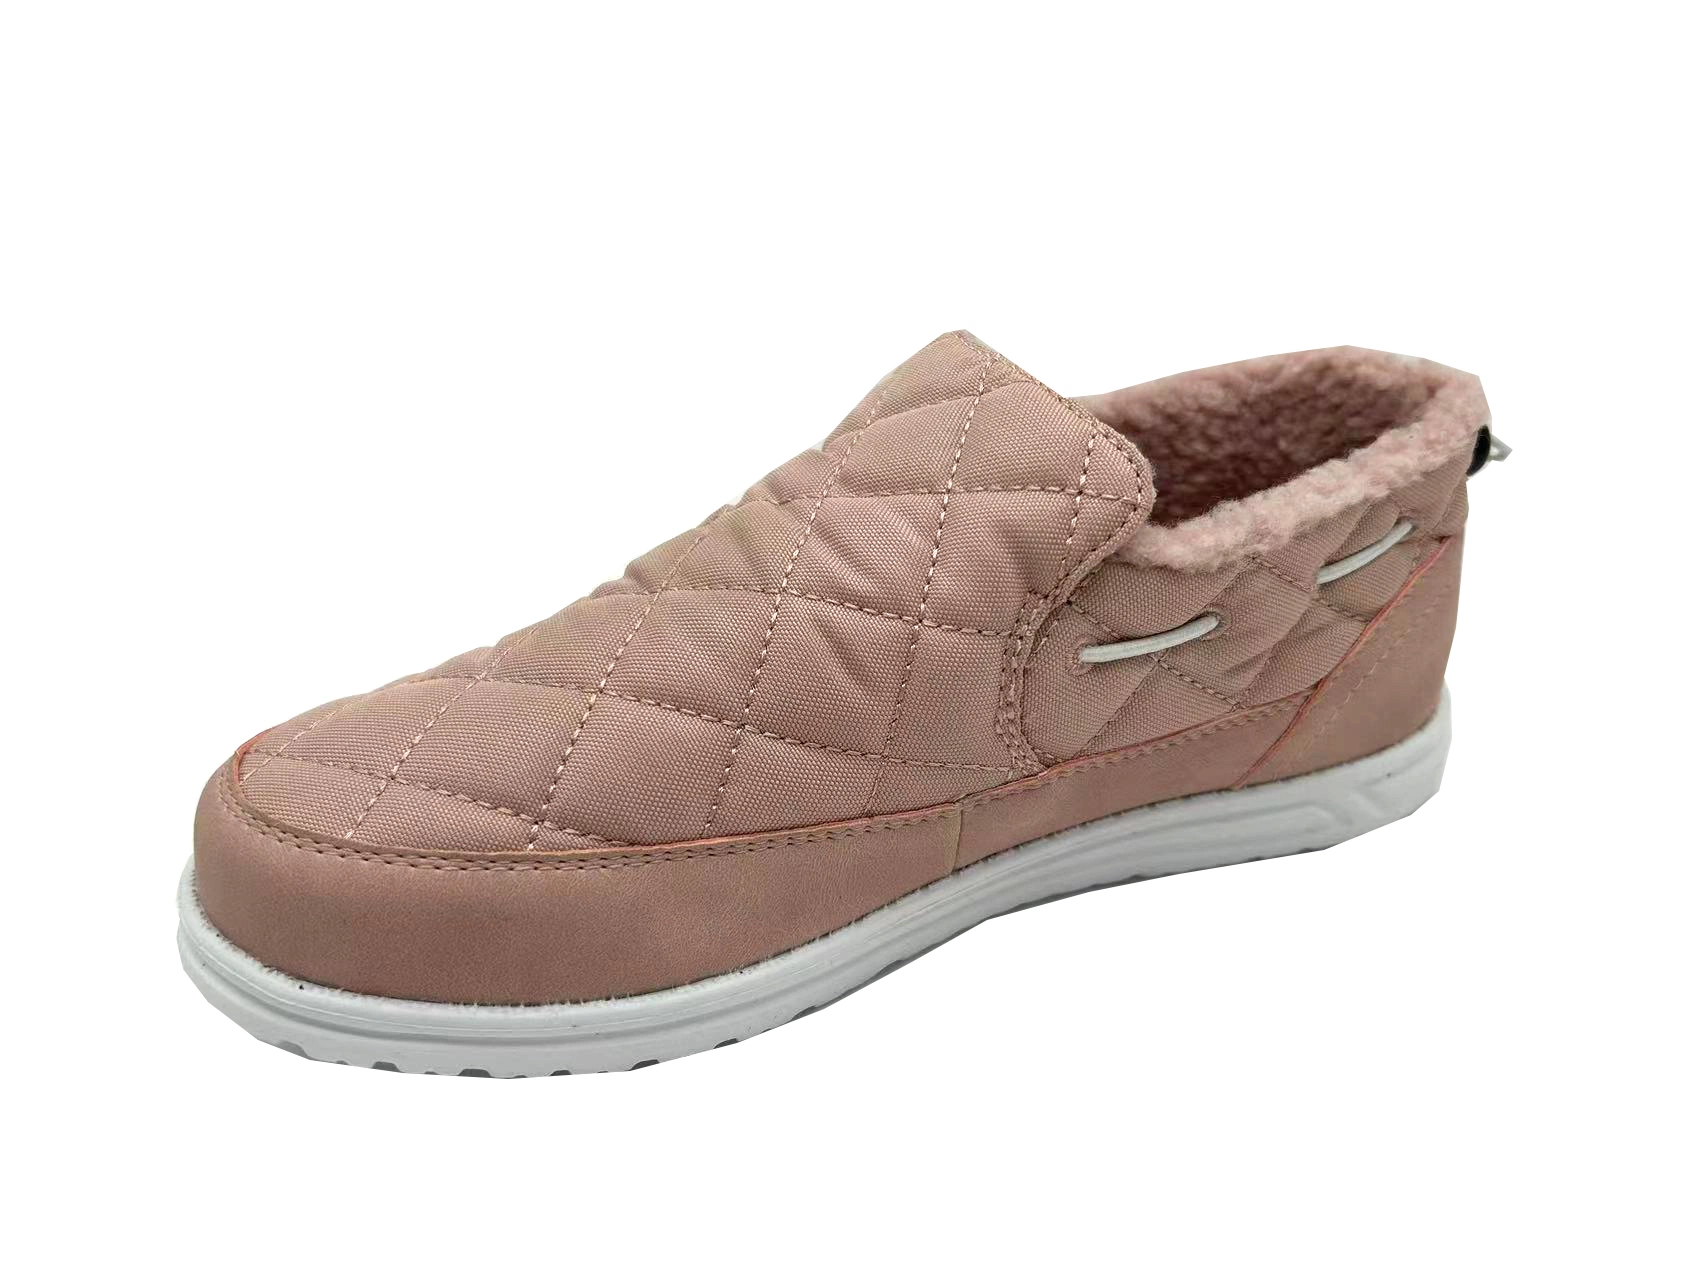 Damas Zapatillas casual primavera otoño moda zapatos Rosa transpirable de resbalar en calzado deportivo